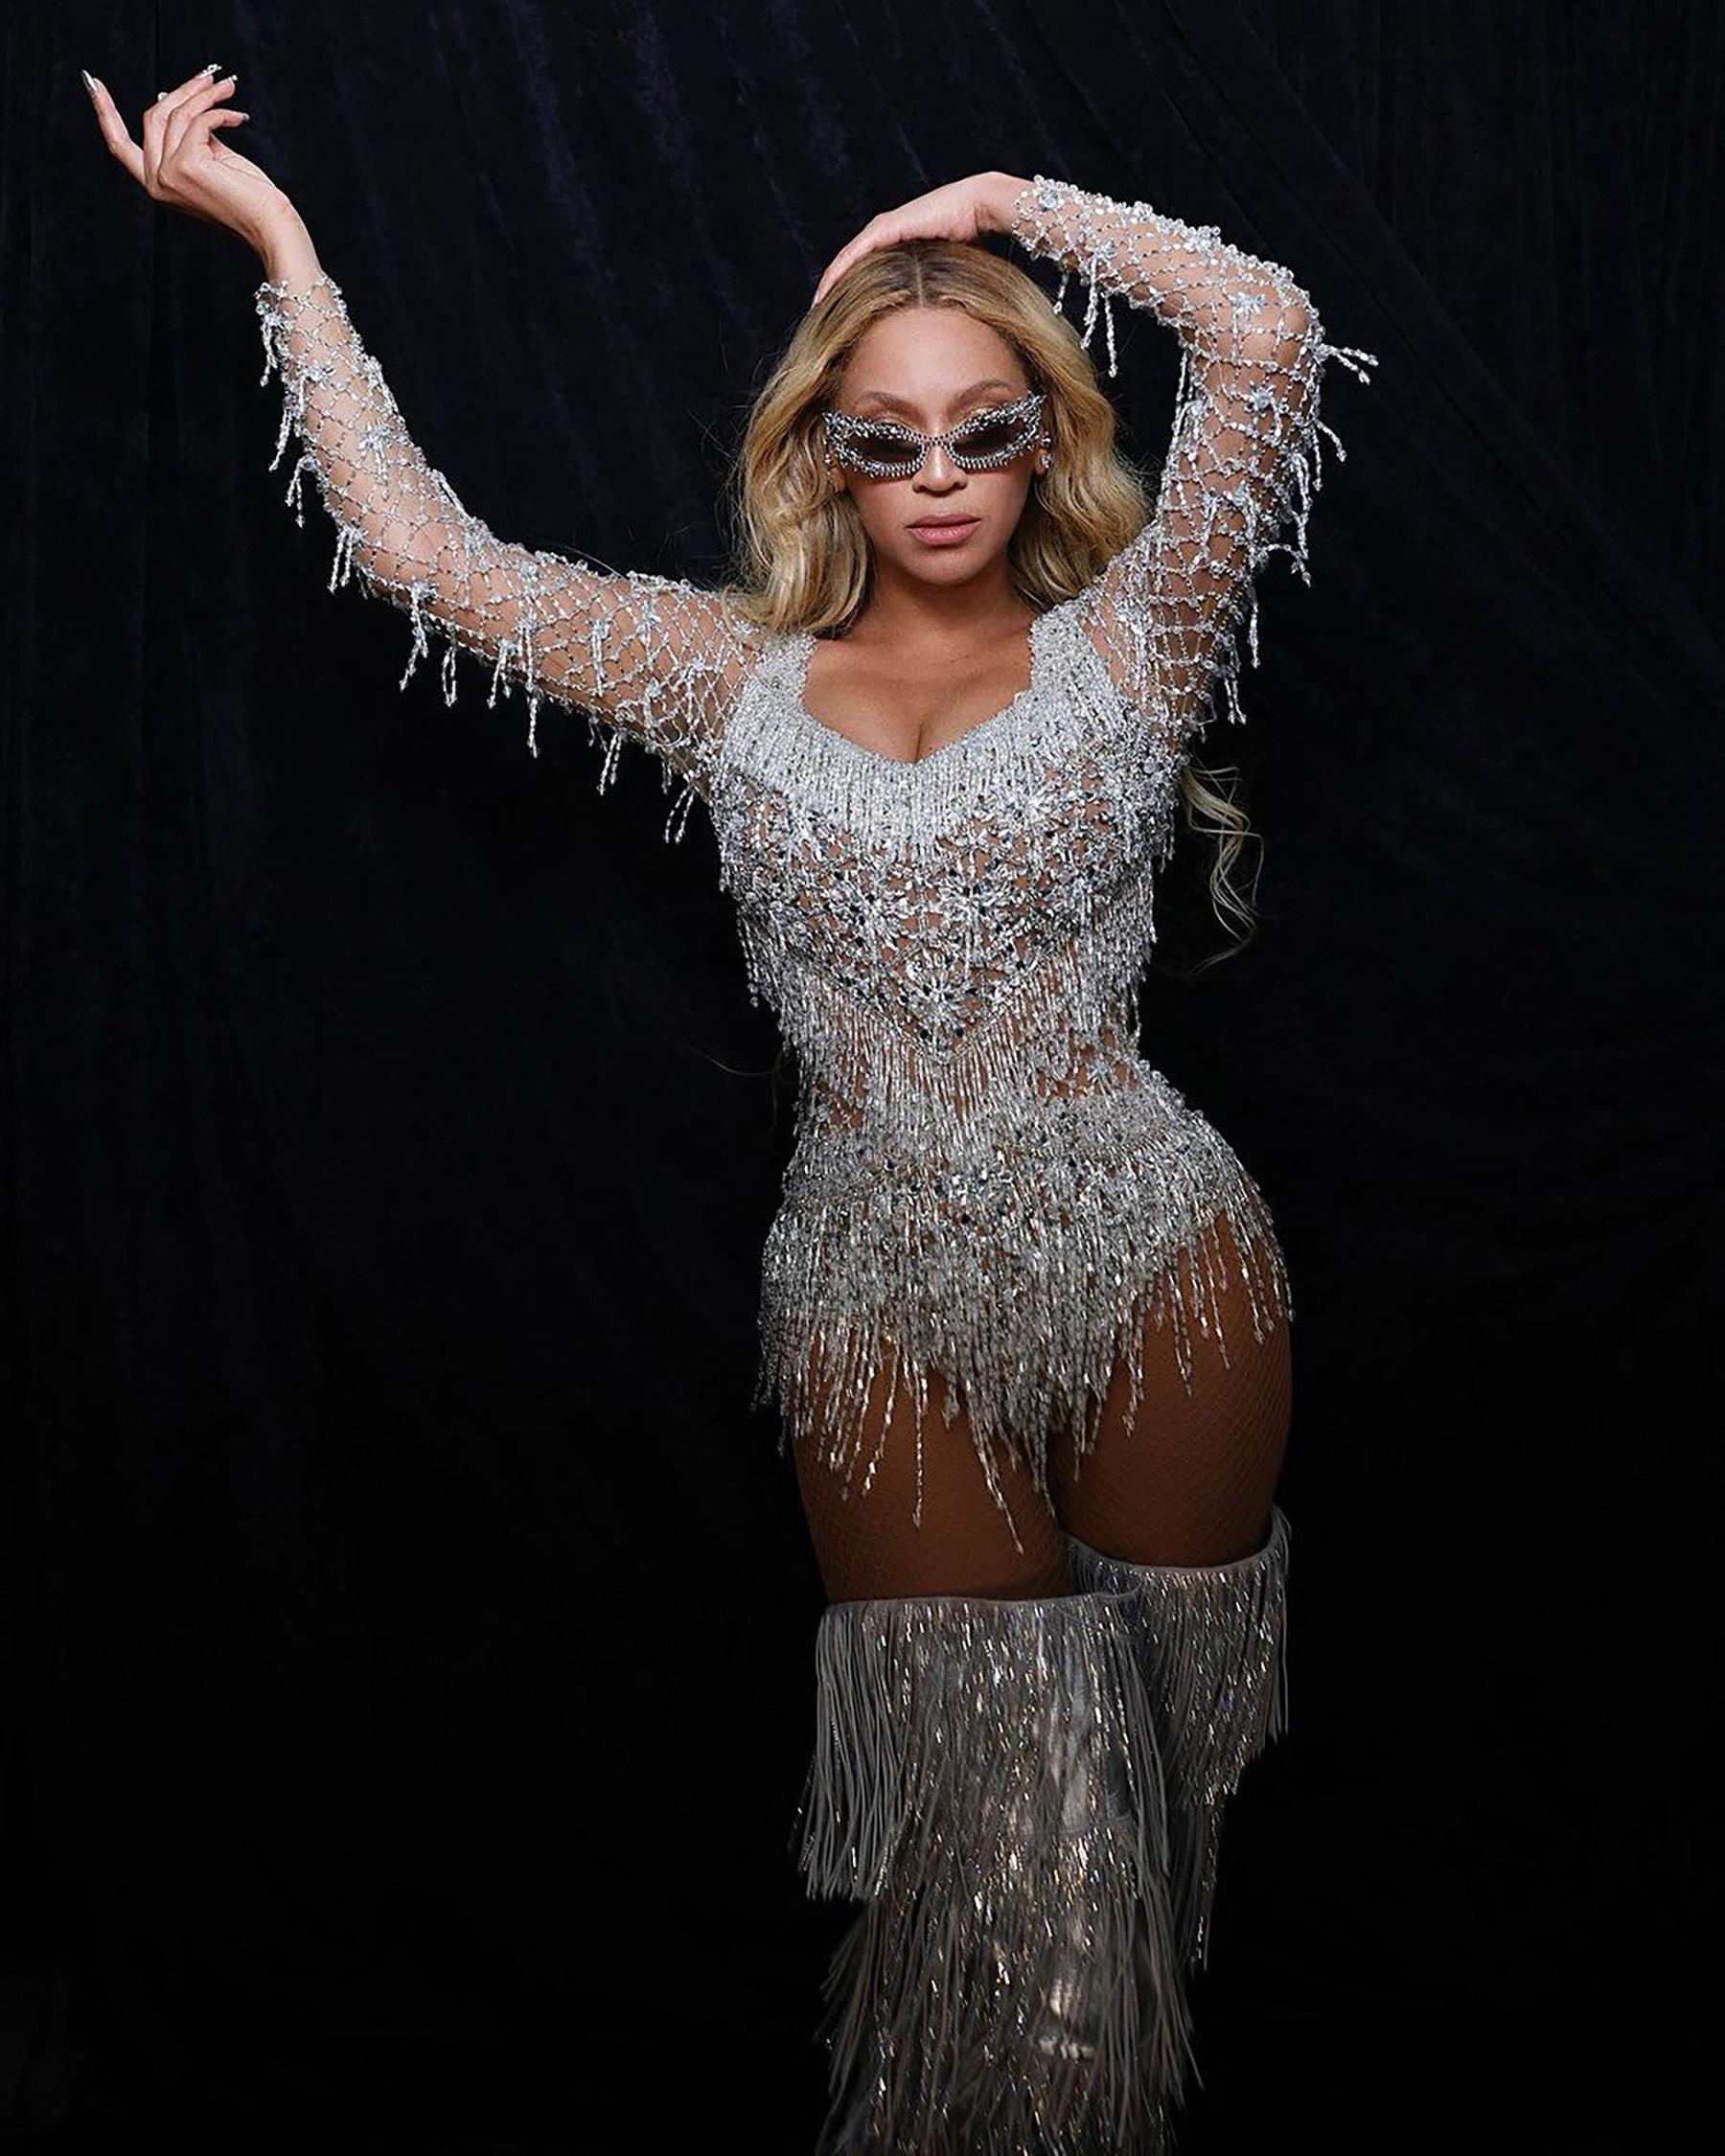 Beyoncé stuns in glittering ensemble created by Brazilian brand PatBo during Renaissance tour.